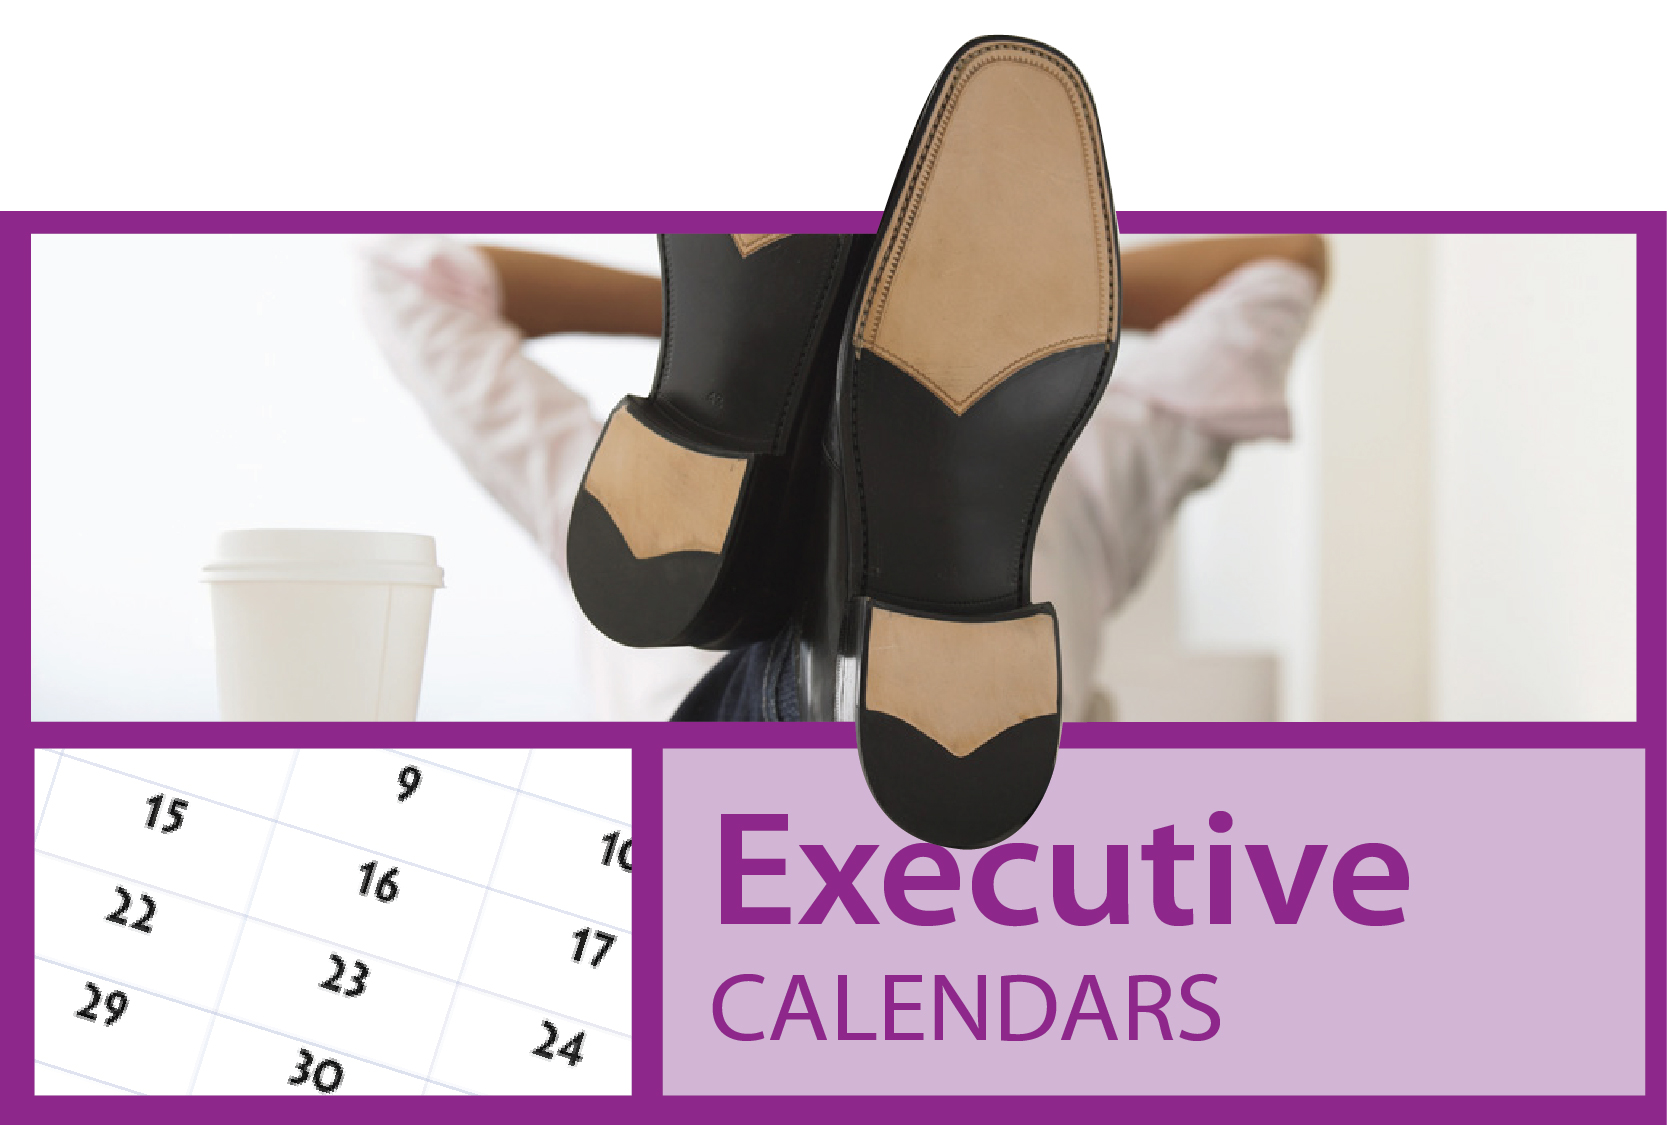 Executive imprint calendars for business